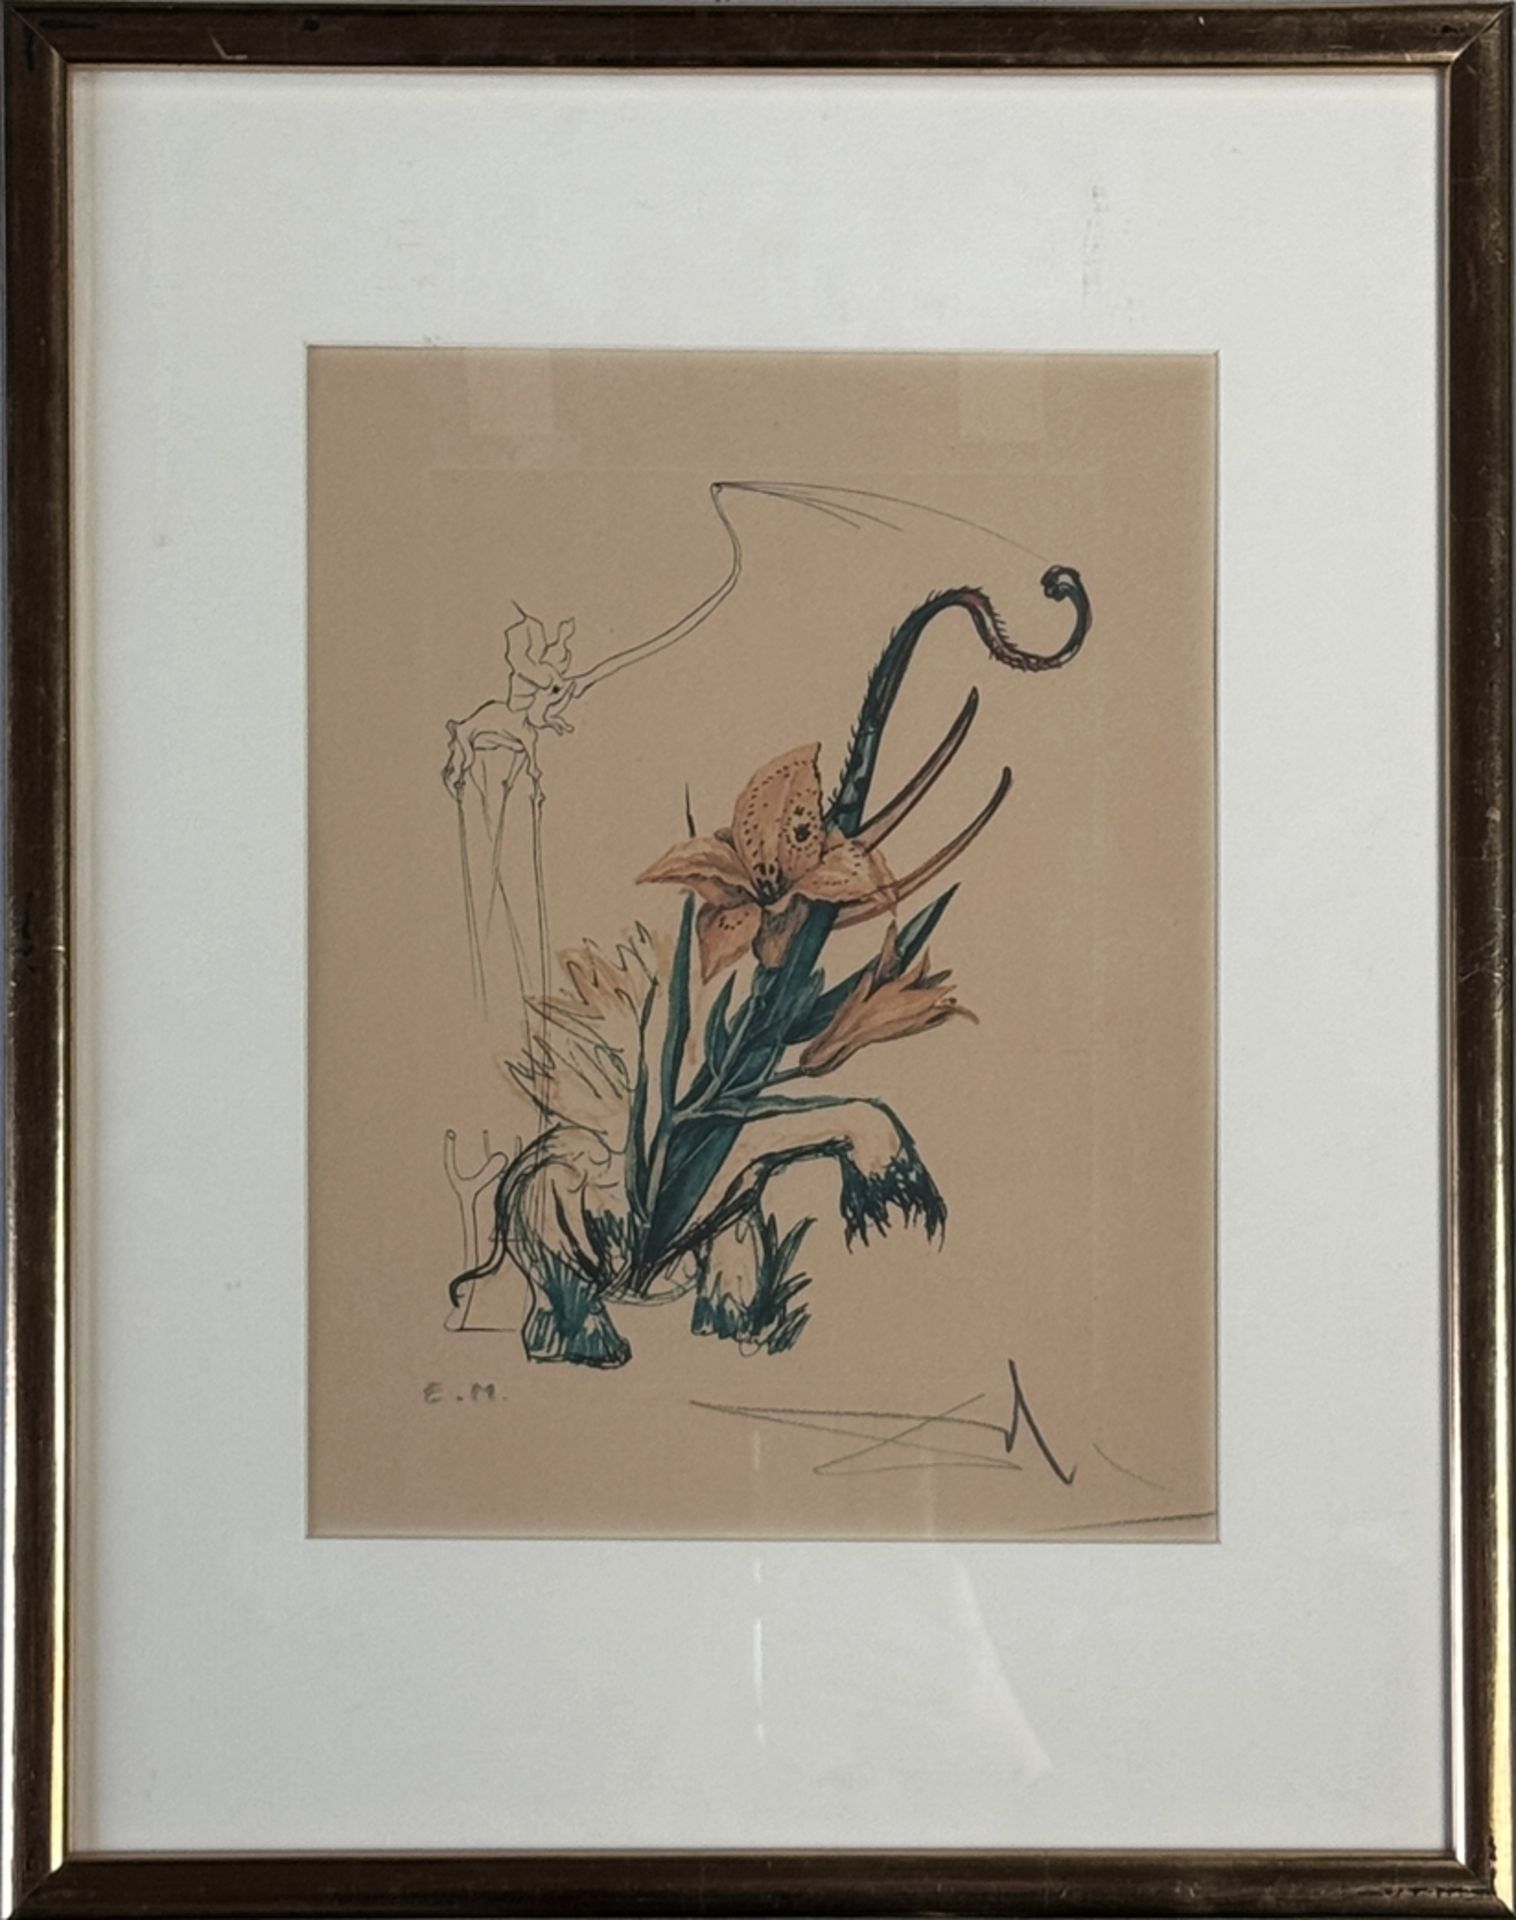 Dali, Salvador (1904 - 1989 Figueres) "Hemerocallis thumbergii elephanter furiosa", from the series - Image 2 of 3